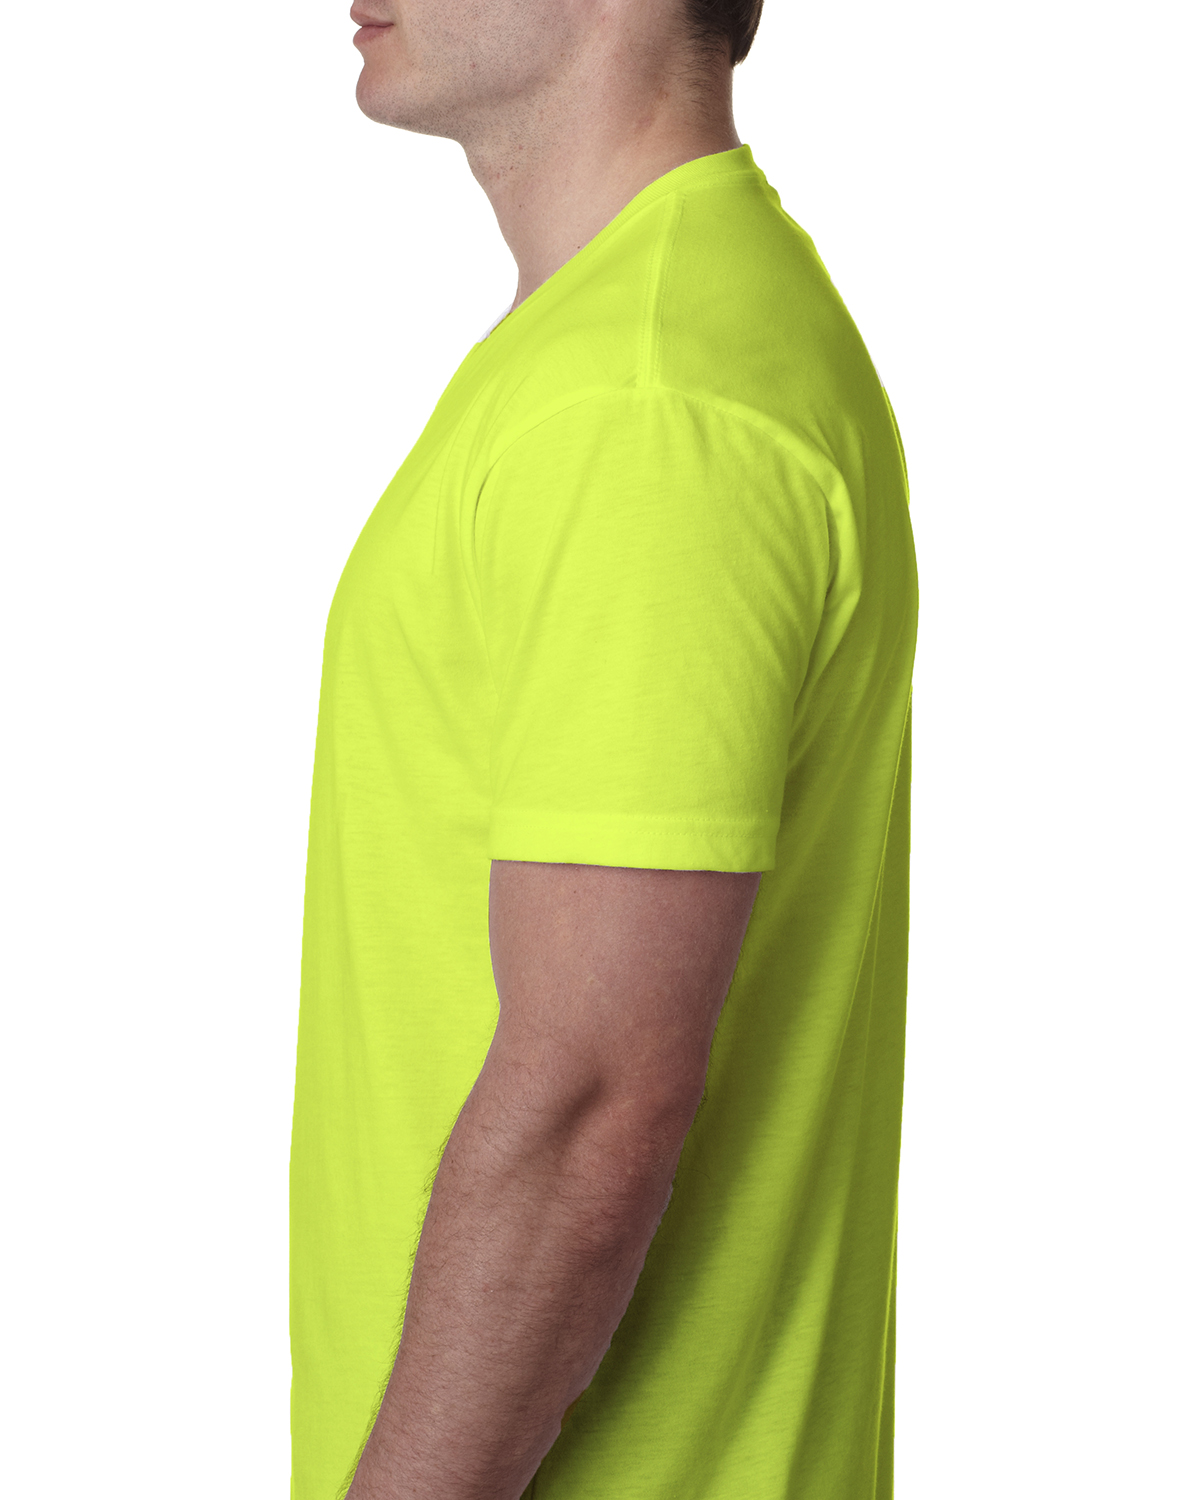 Next Level Men's Premium CVC V-Neck Soft S-XL T-Shirt R-6240 | eBay